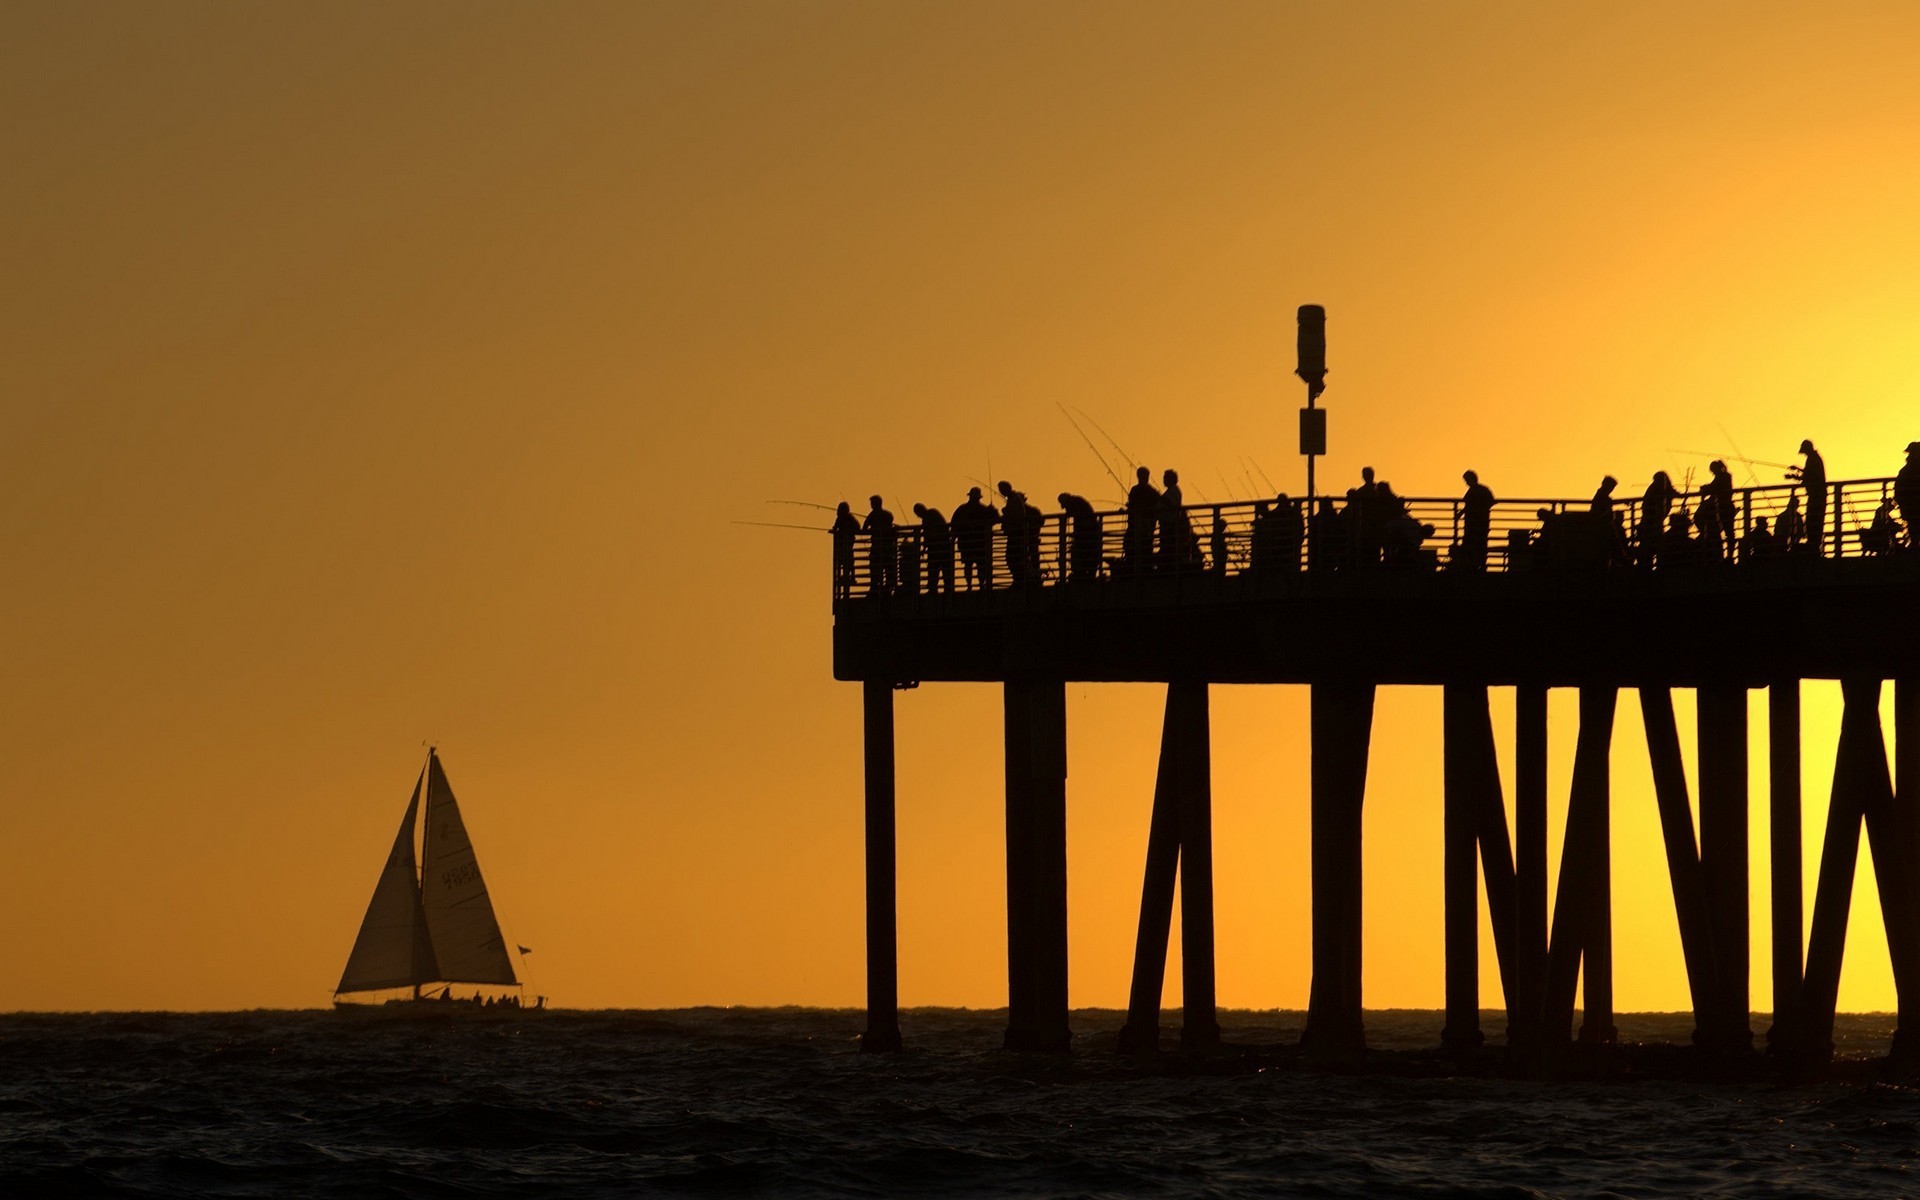 fishing, man made, pier, ocean, people, photography, sailboat, sunset iphone wallpaper